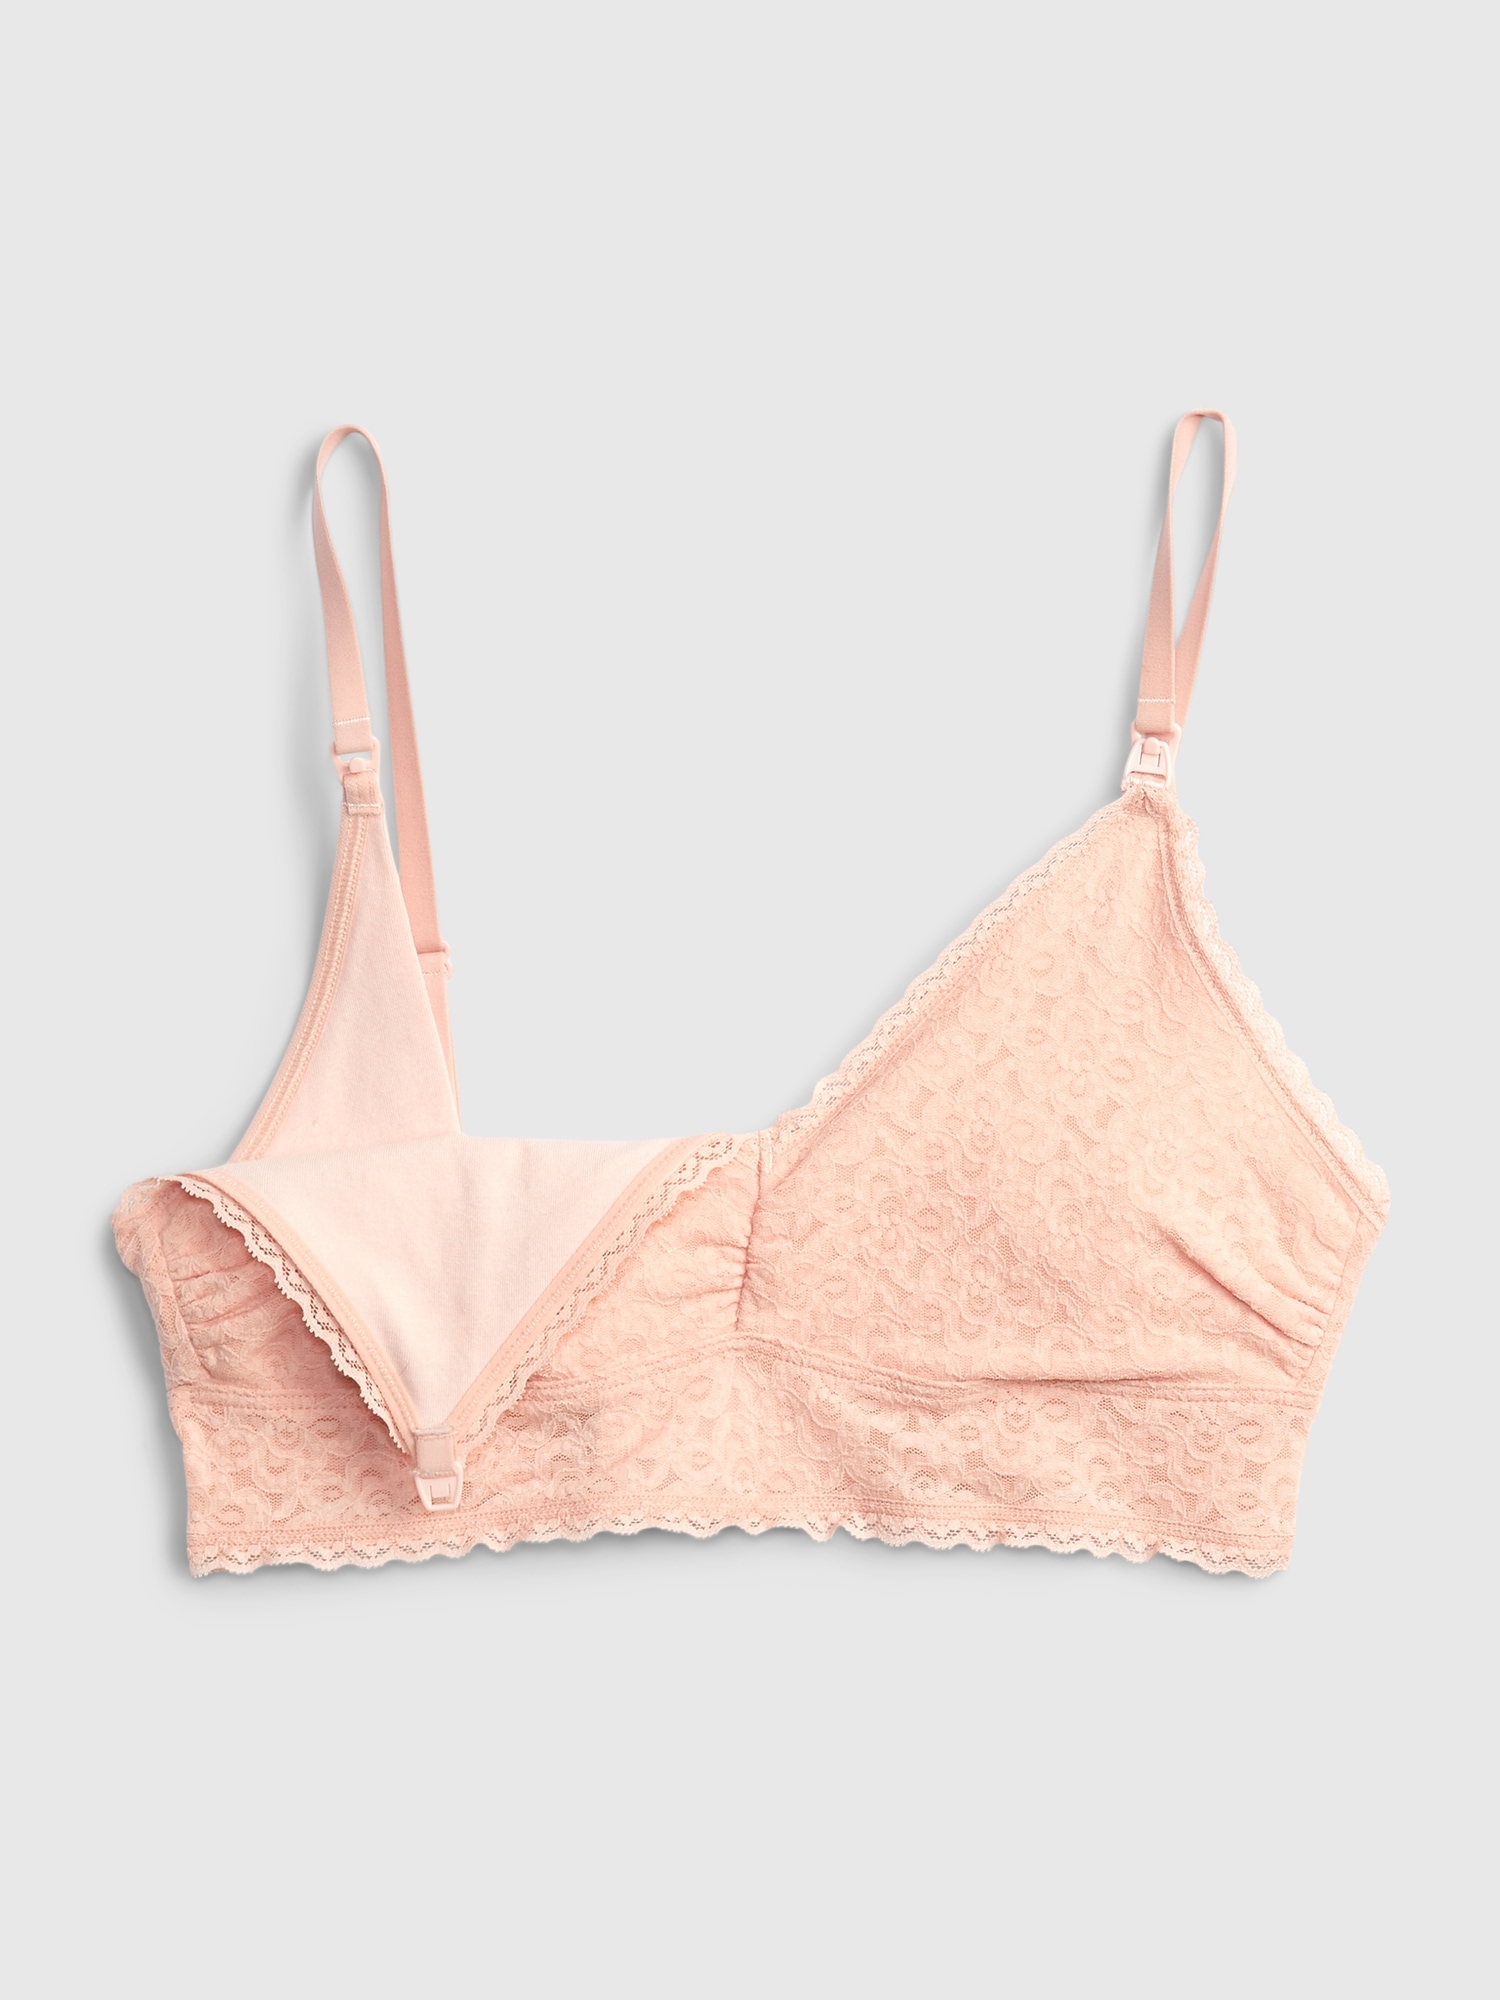 Dorina Quartz lace lightly padded nursing bra in pink